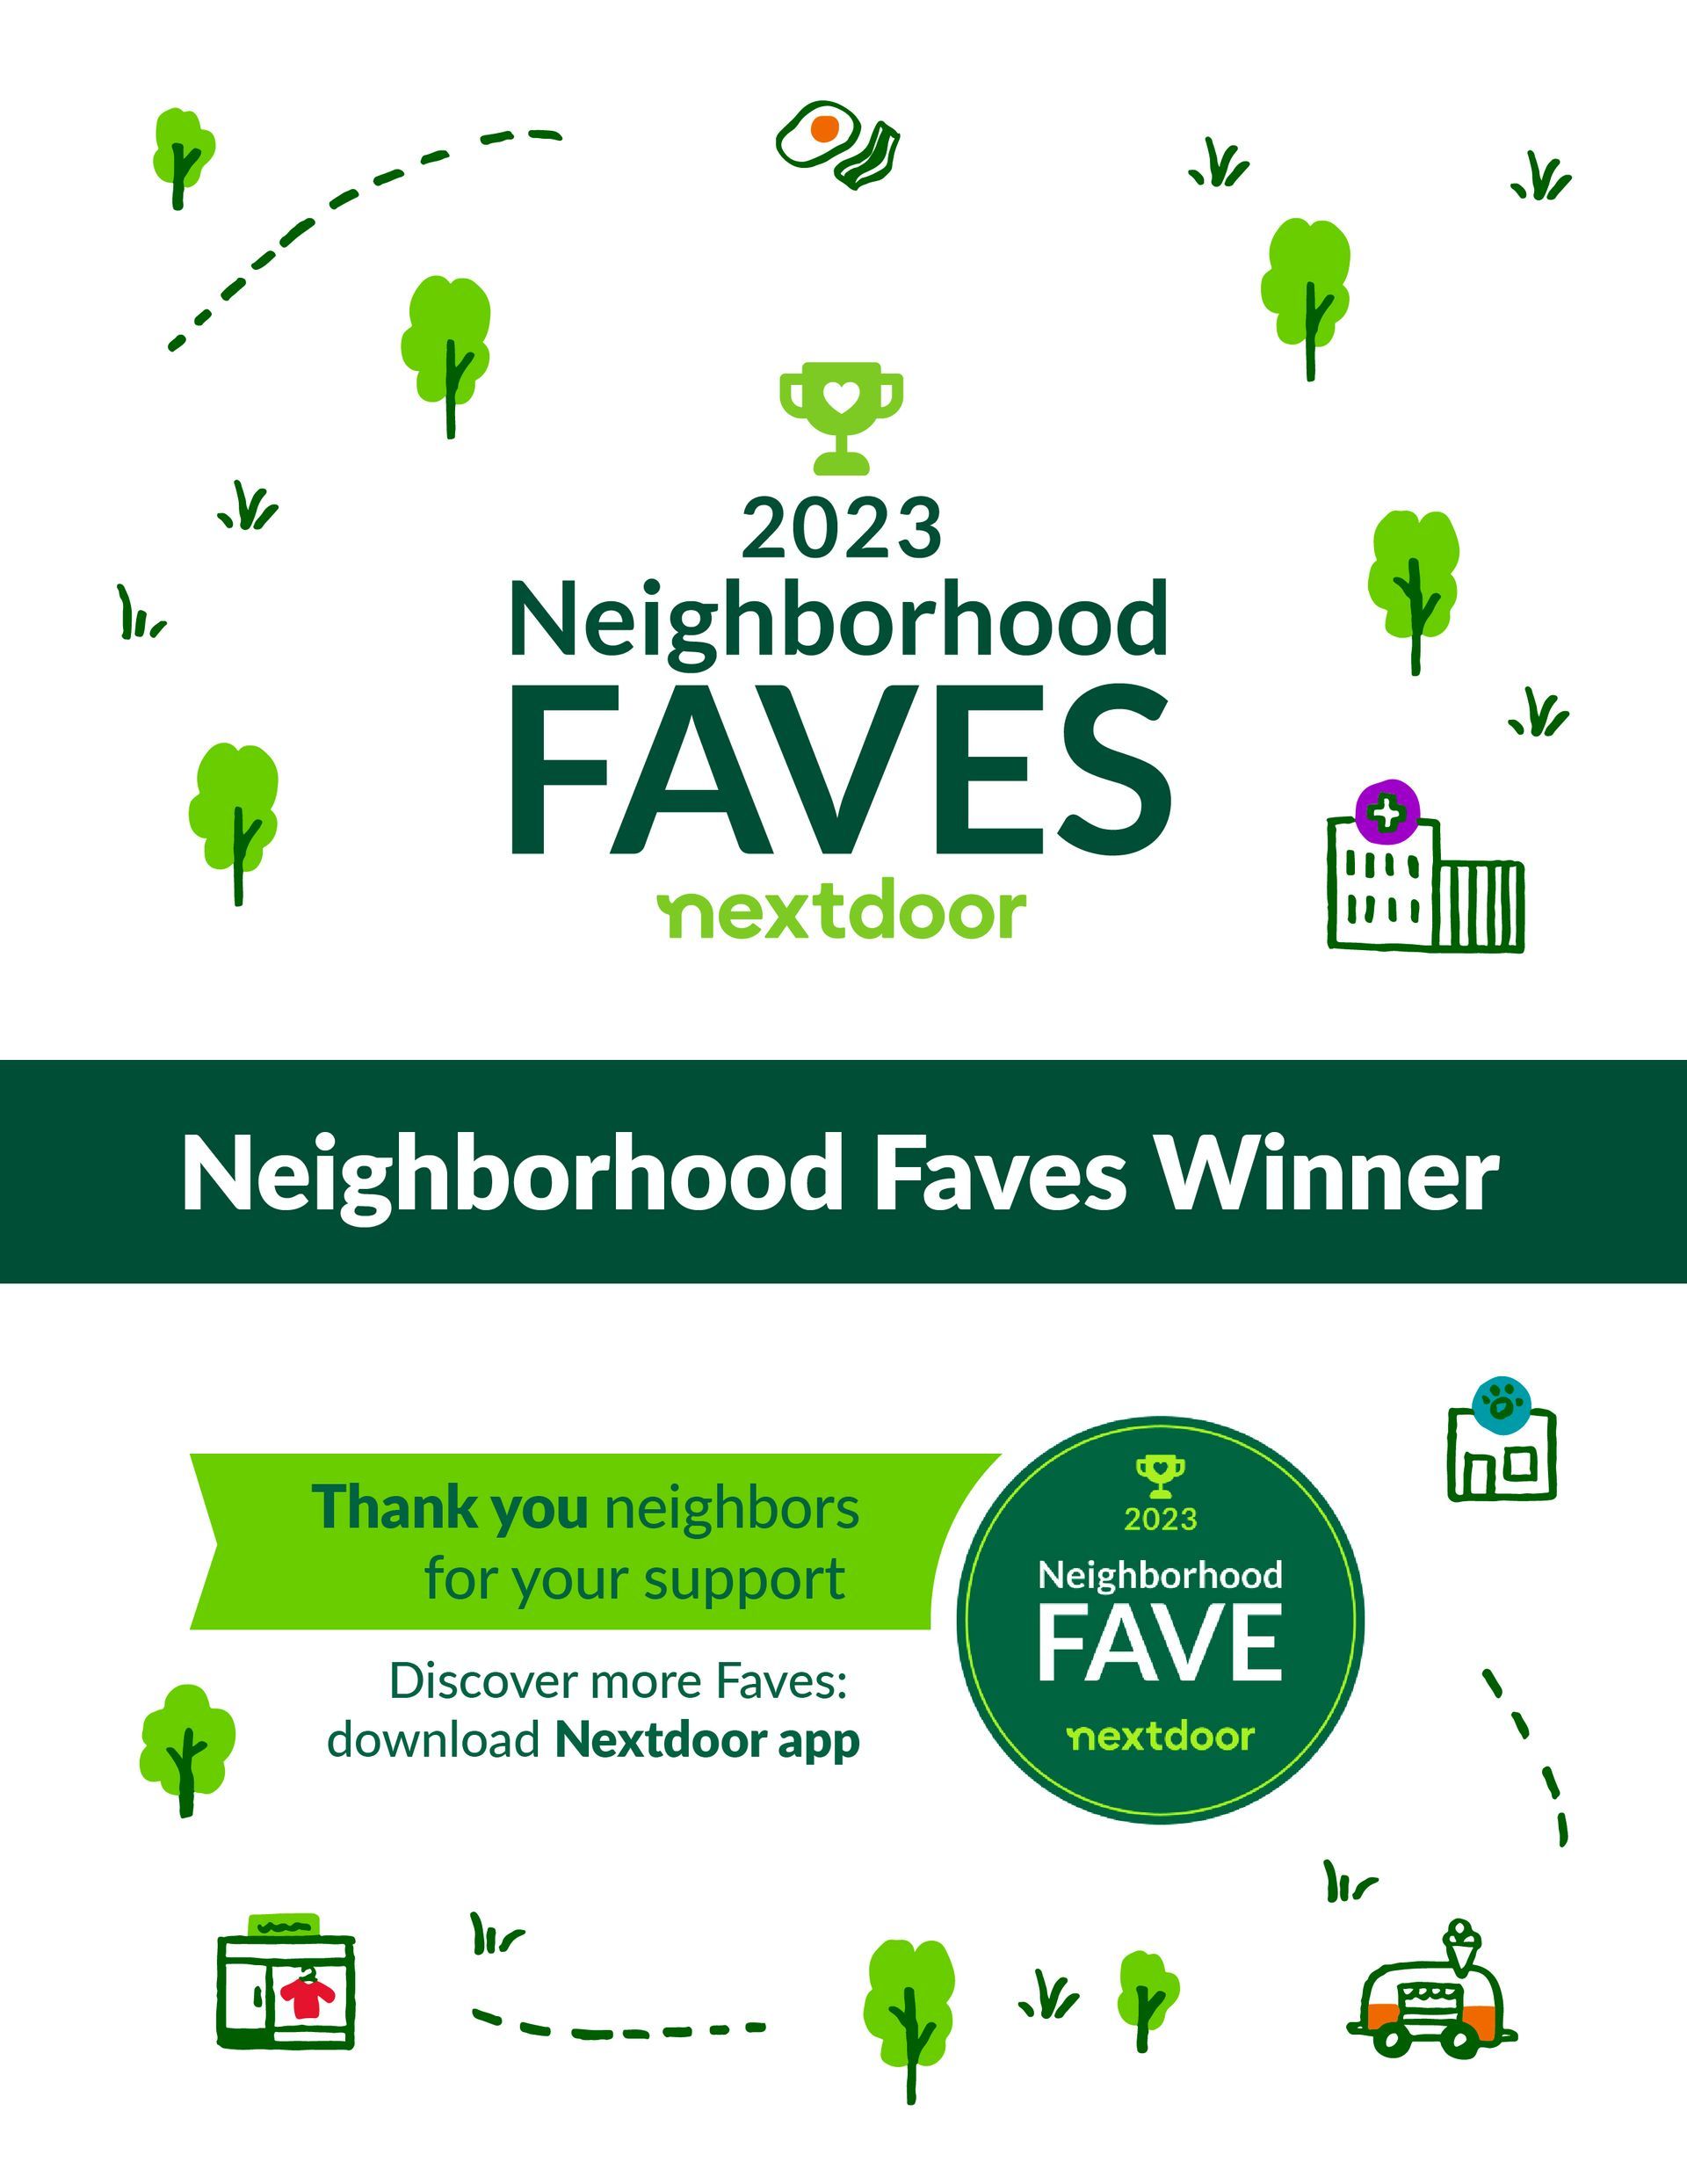 2023 Neighborhood Faves Nextdoor award